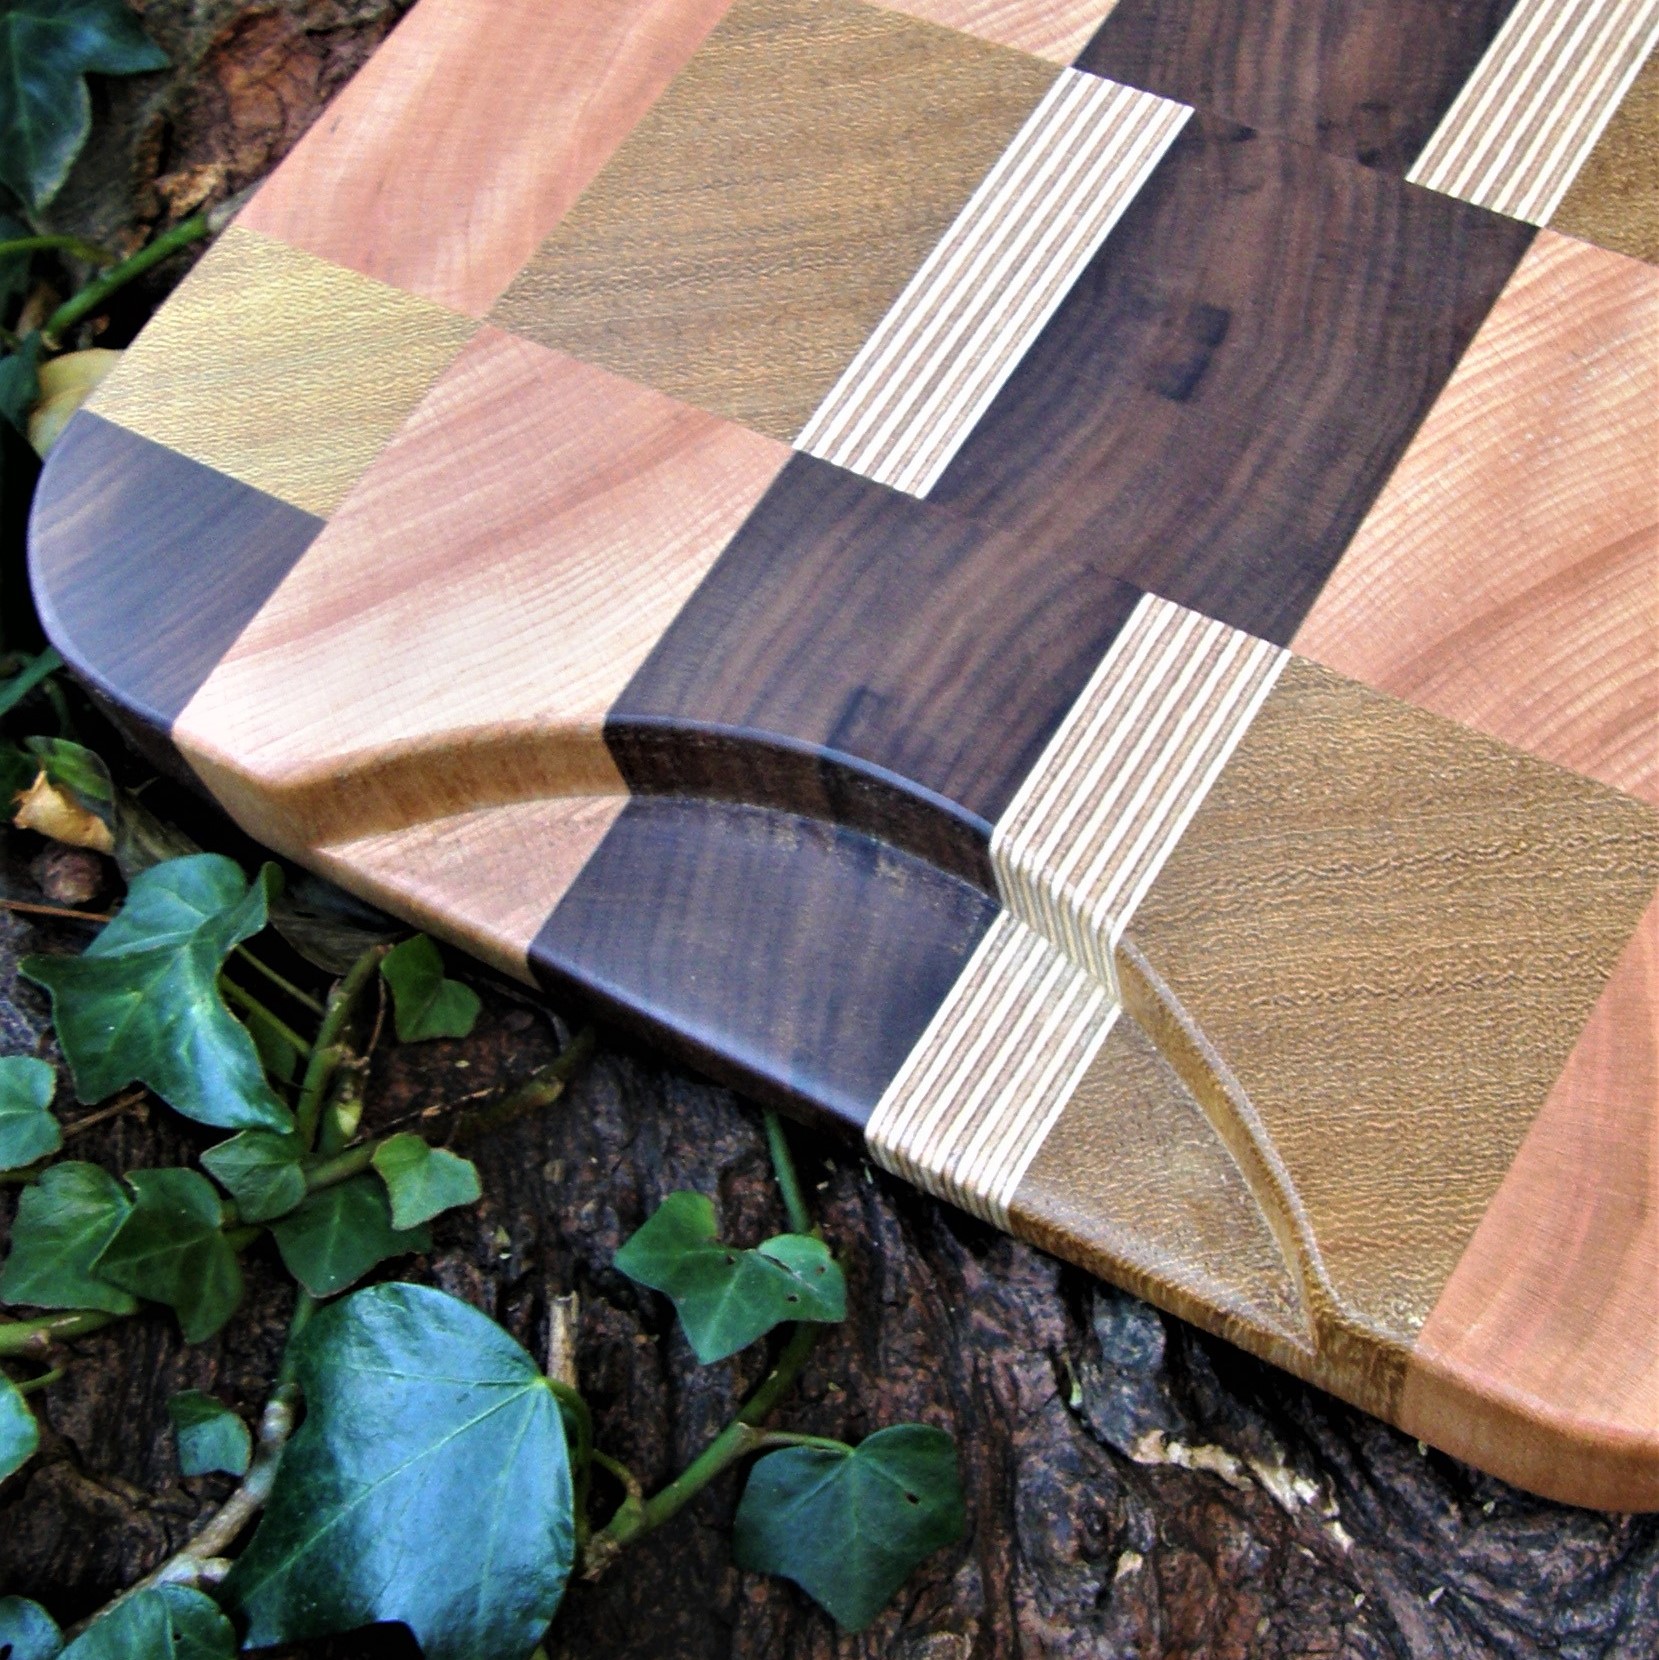 Rathlin Handmade End Grain chopping board by Grant Designs.